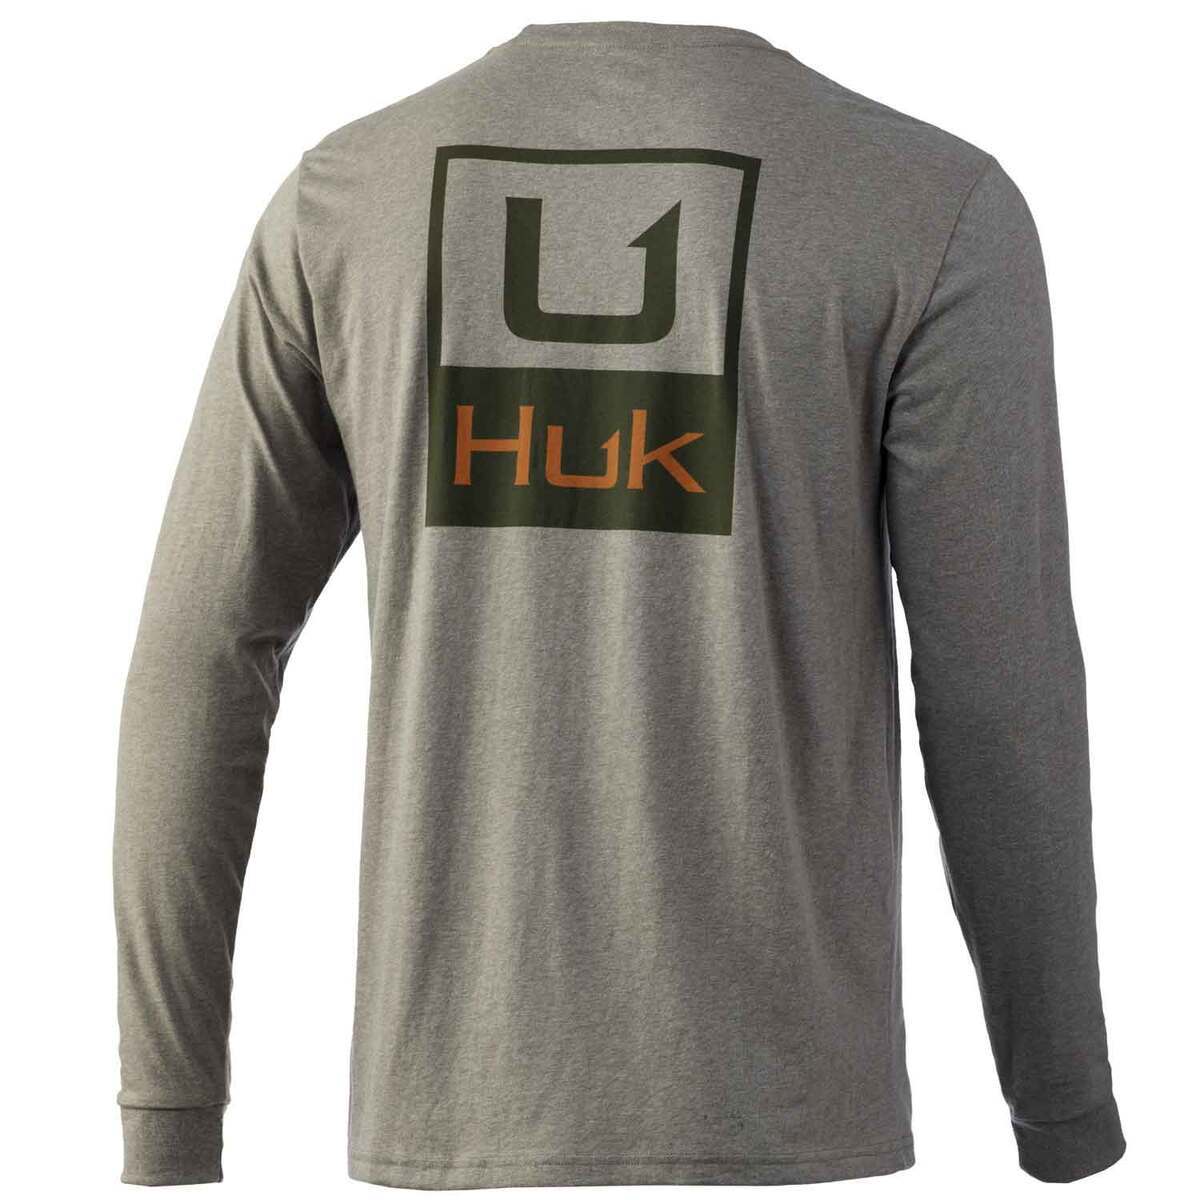 Huk Fishing Shirts Big Tall, Huk Fishing Long Sleeve Shirts